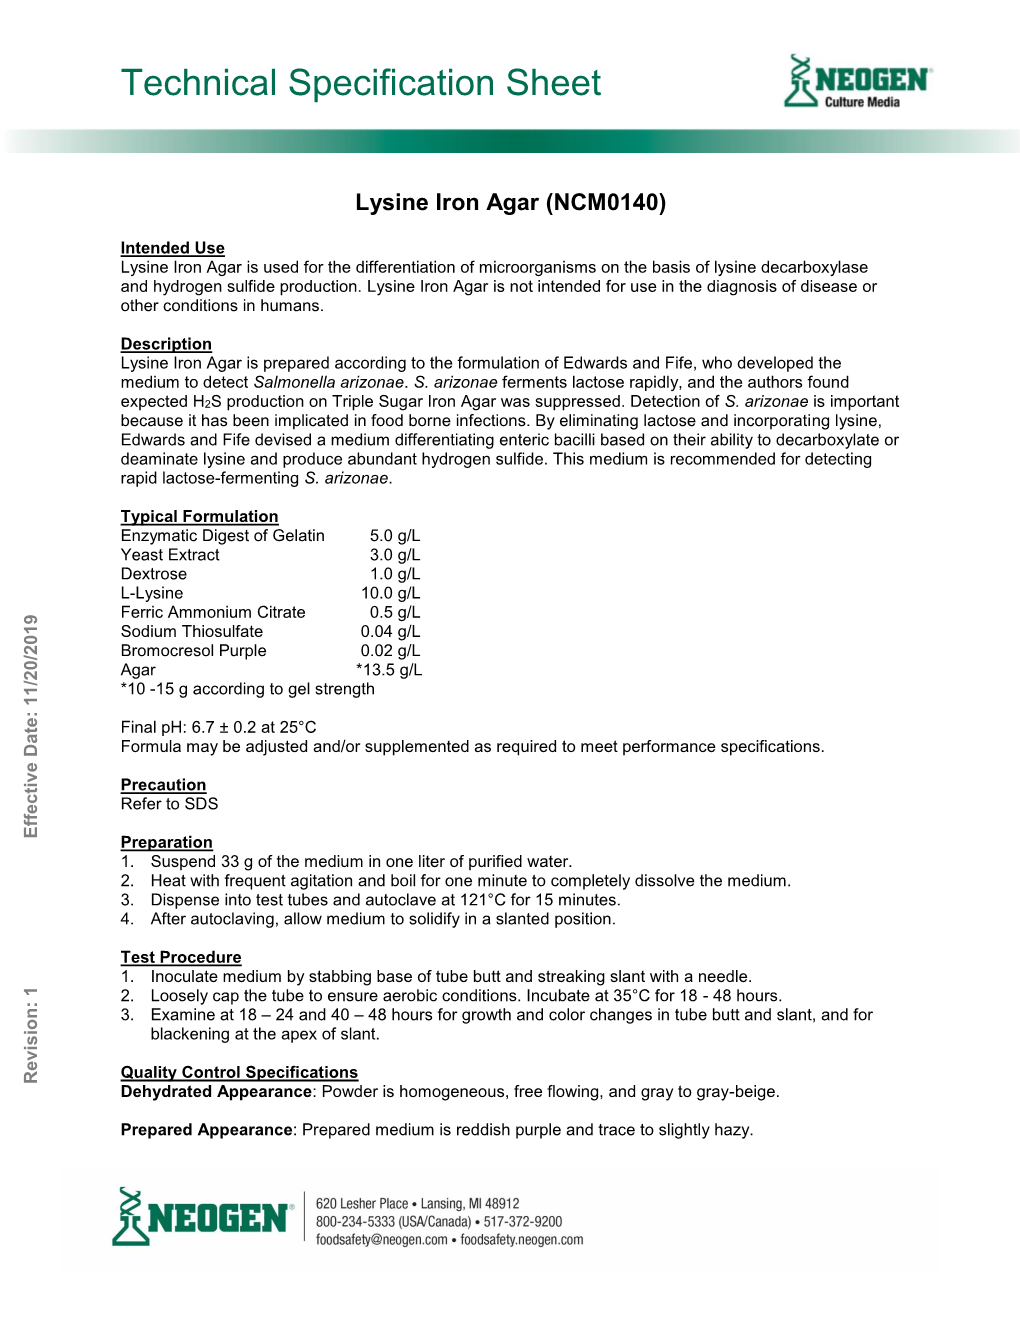 Lysine Iron Agar